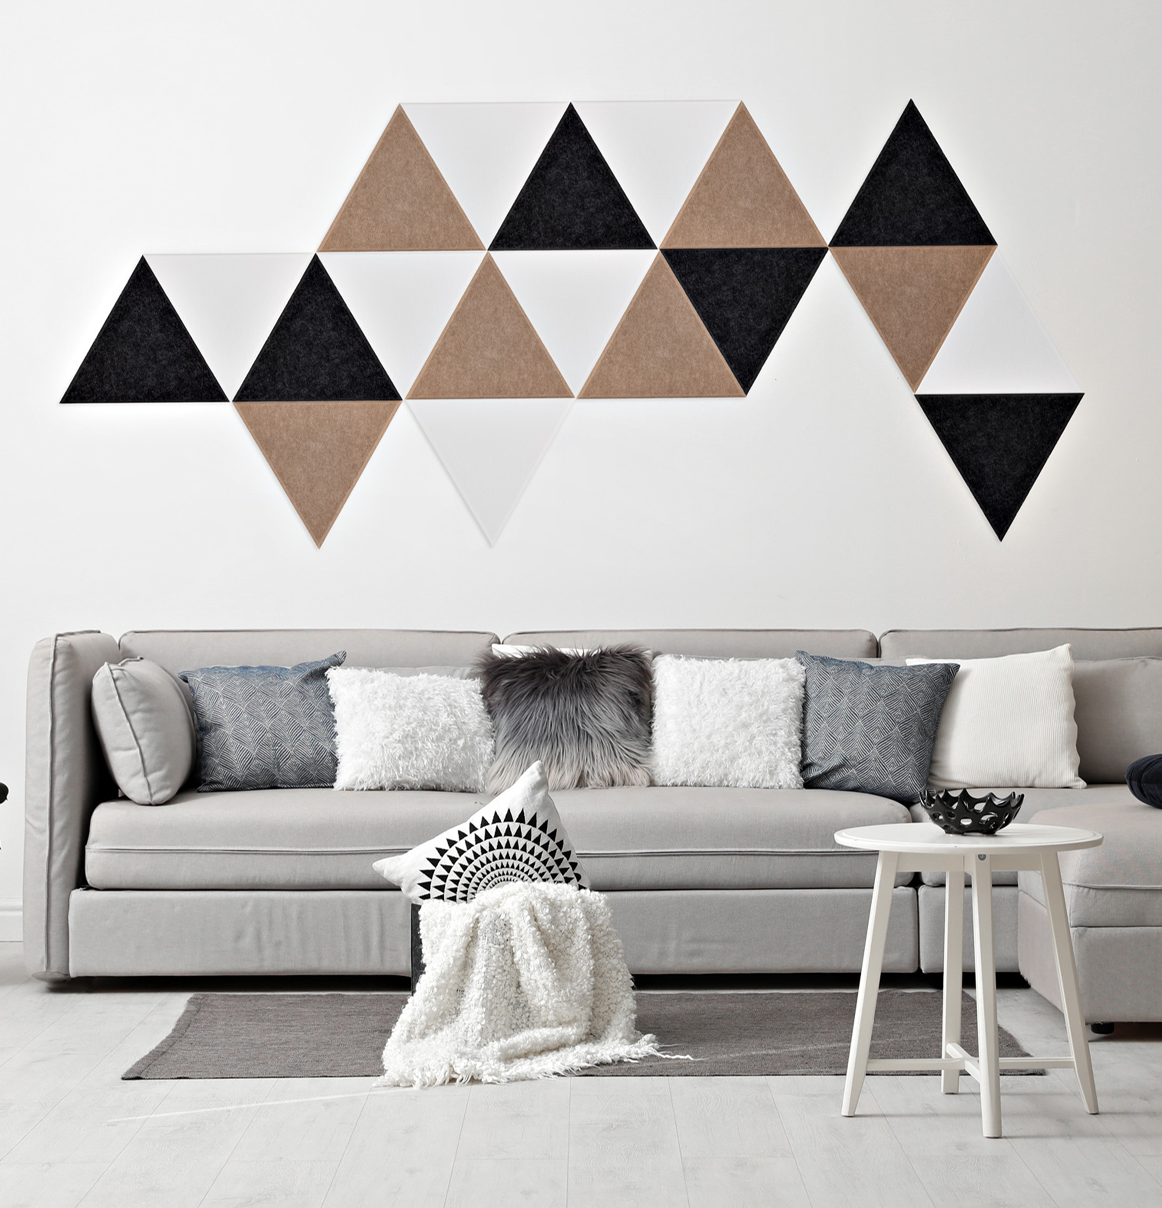 Triangular Acoustic Wall Panels